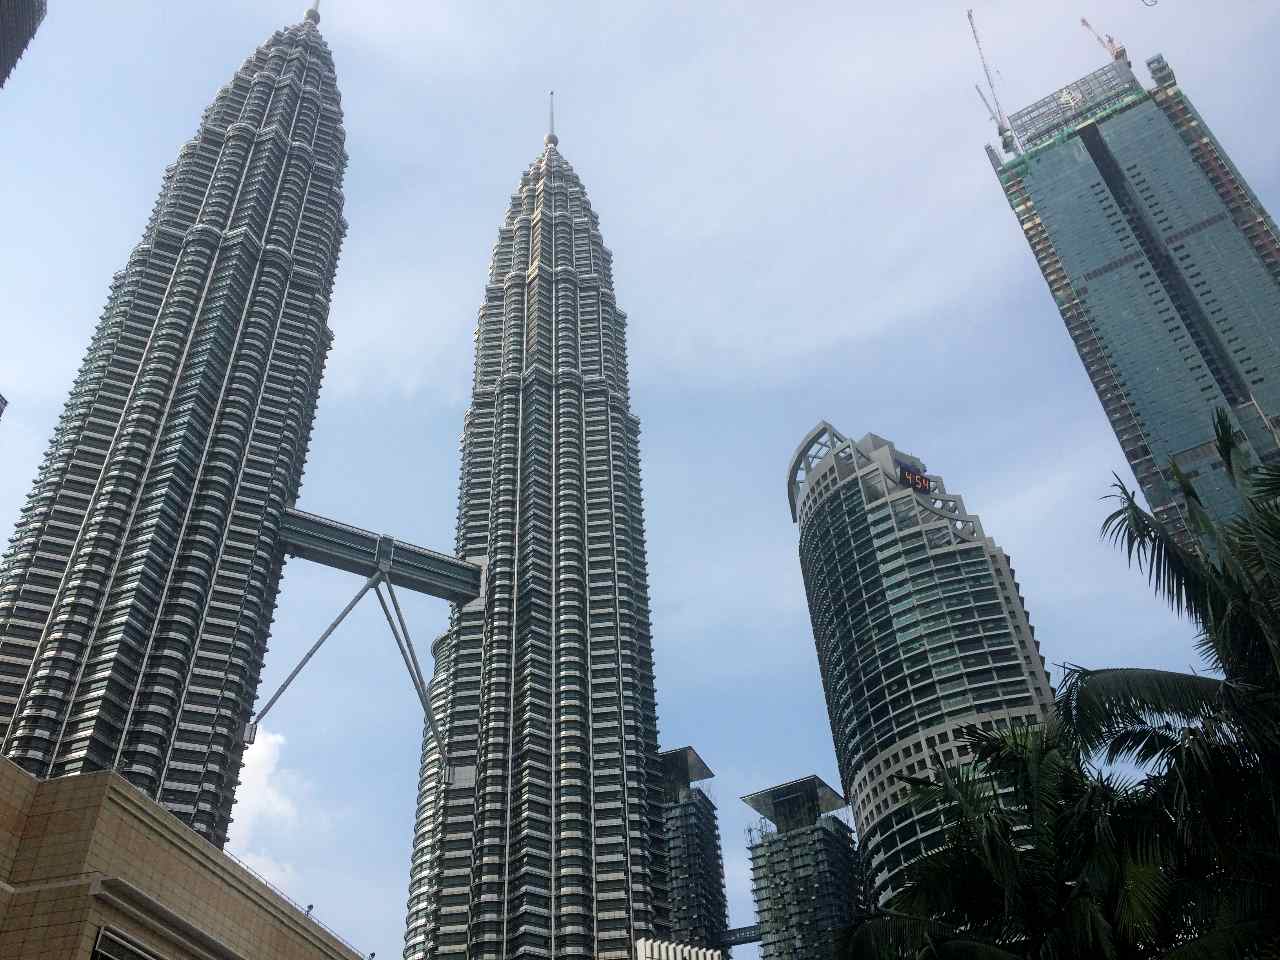 Petronas Twin Towers Kl, Malaysia